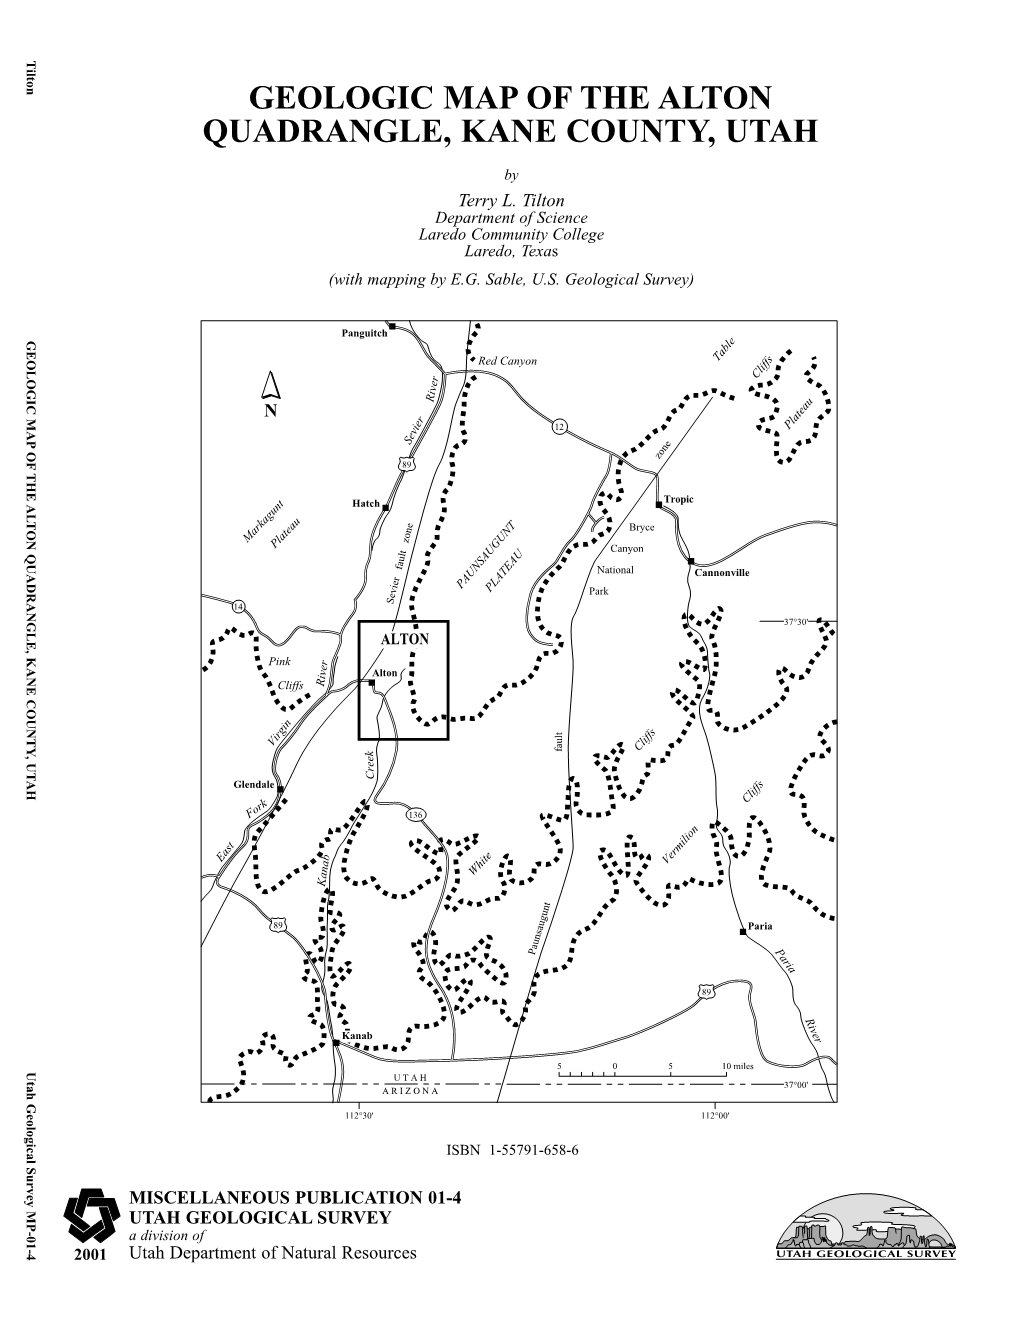 Geologic Map of the Alton Quadrangle, Kane County, Utah